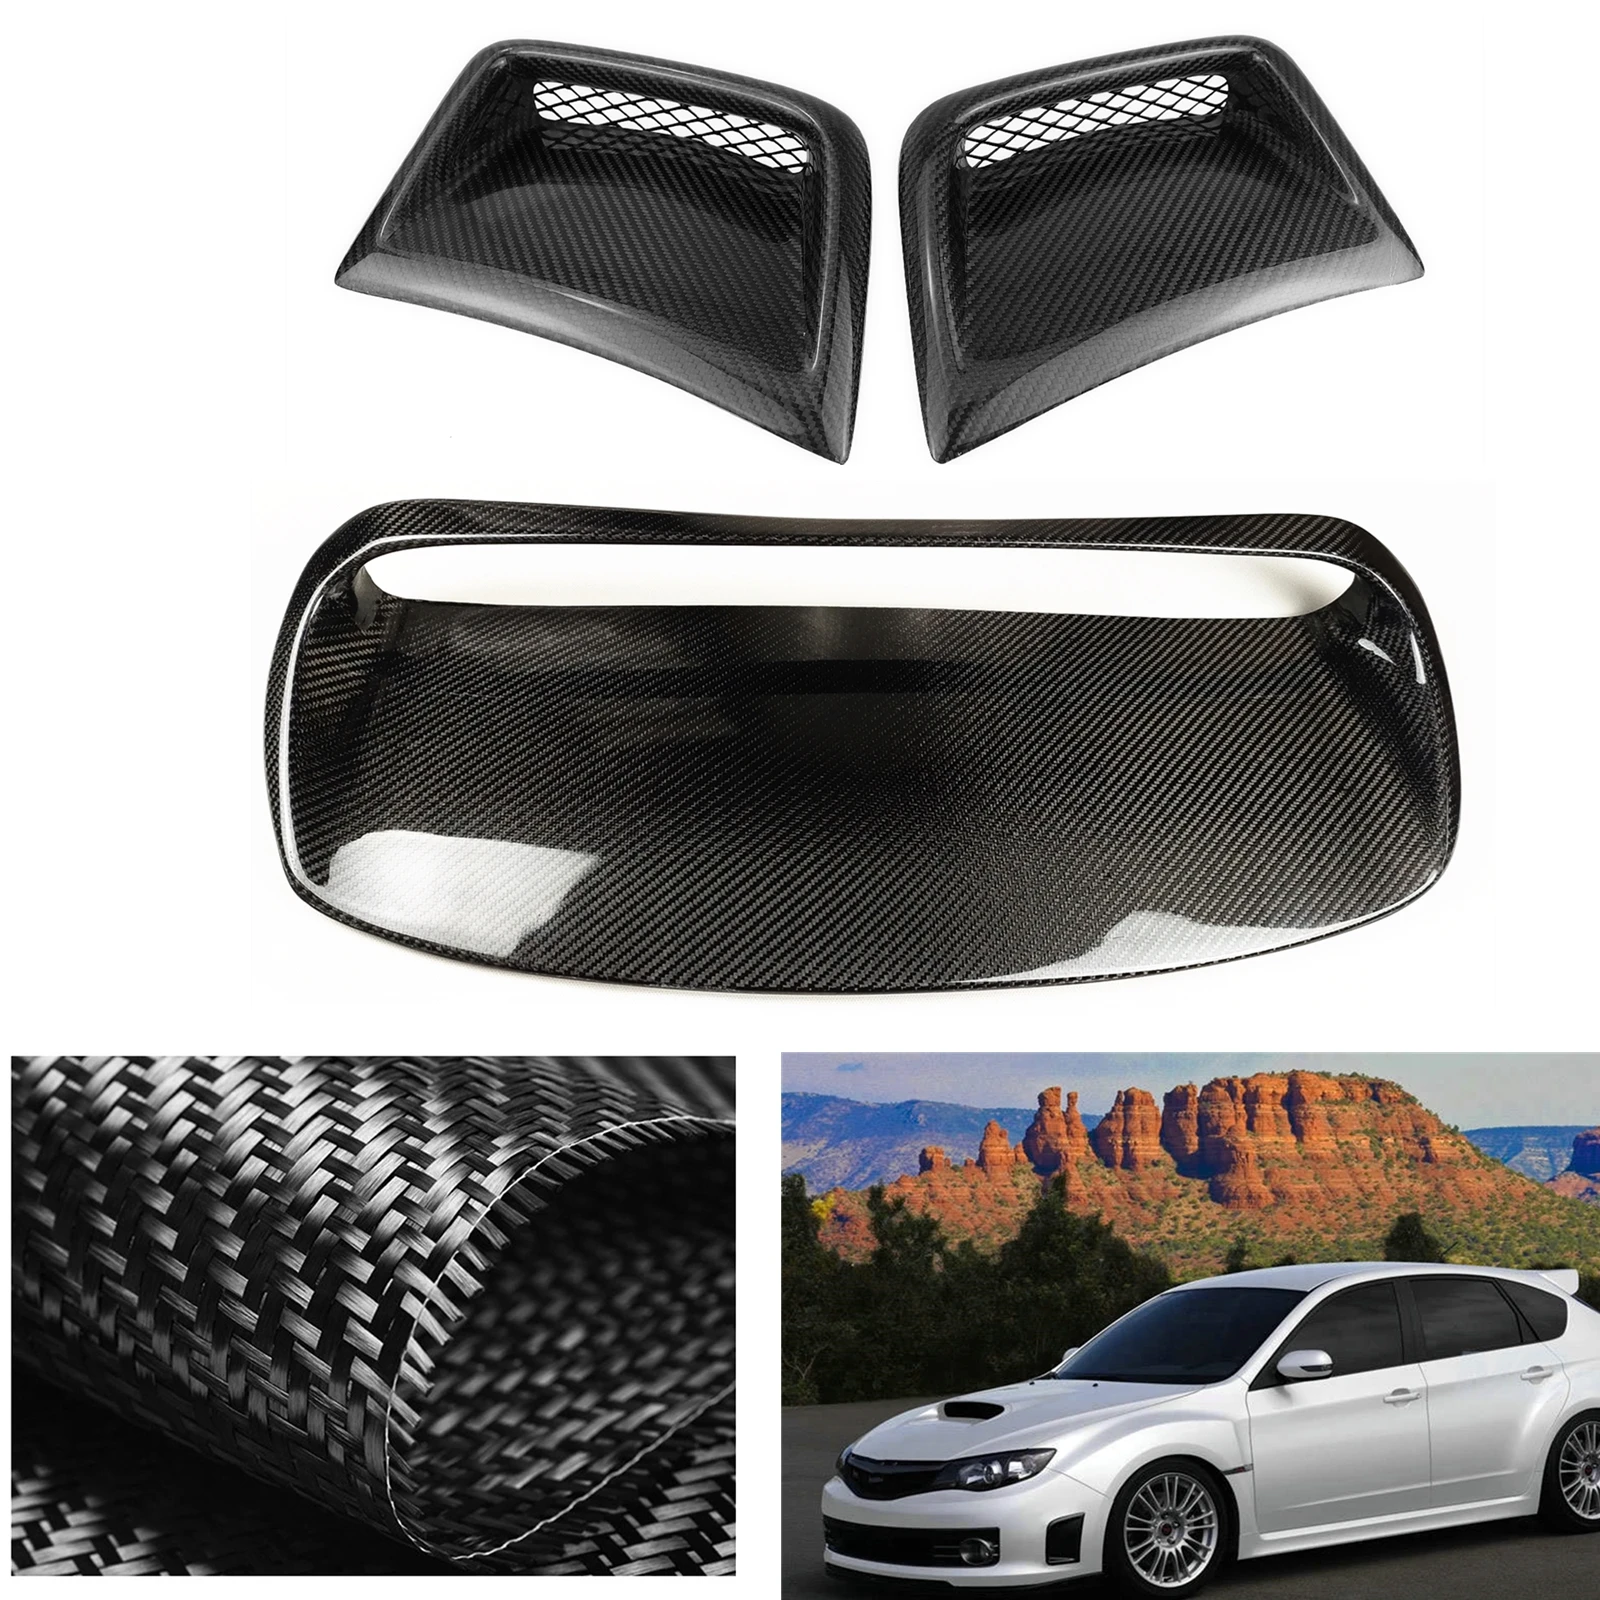 

Carbon Fiber Side Air Duct Bonnet Vent Trim Engine Hood Scoop Cover Outlet Intake Bumper For Subaru Impreza WRX STI 2008-2014